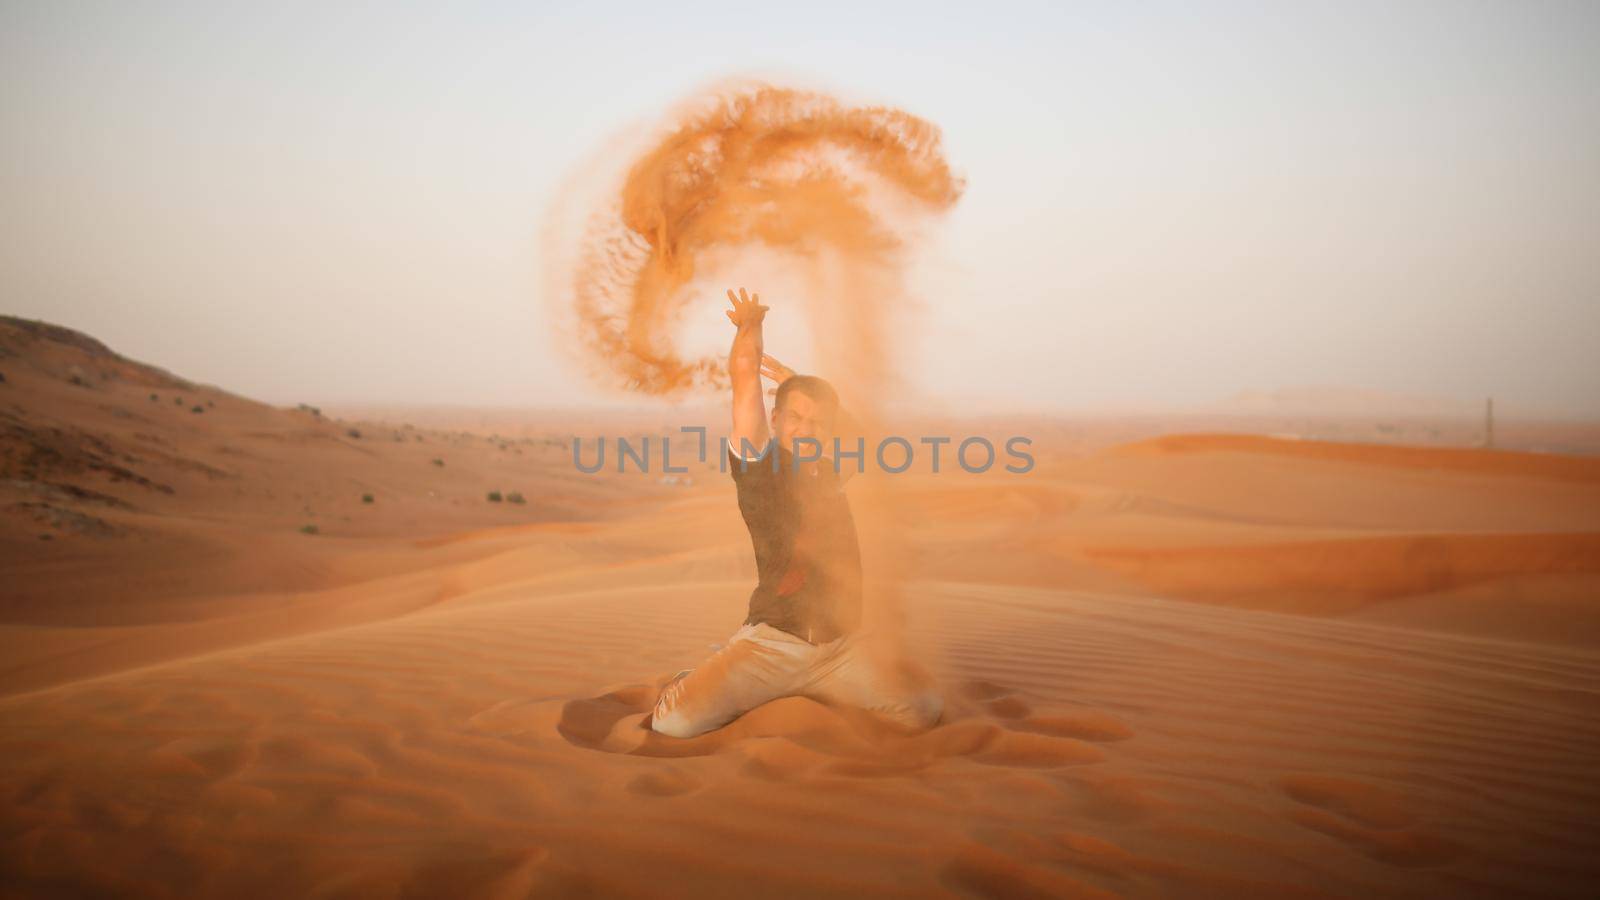 The guy throws sand over himself in the desert. The desert is next to Dubai. UAE